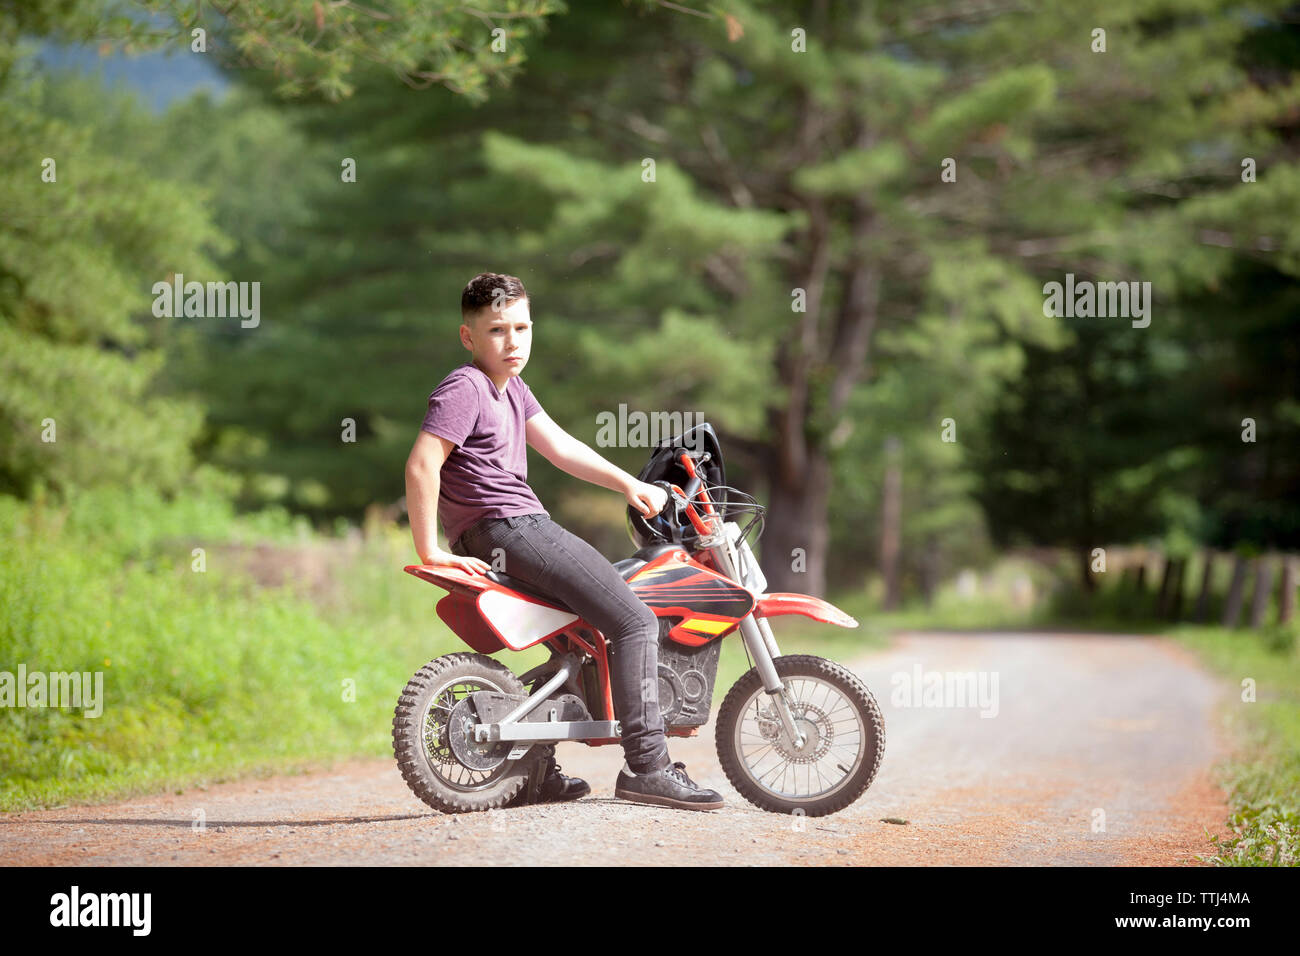 Portrait of boy sitting on dirt bike Banque D'Images